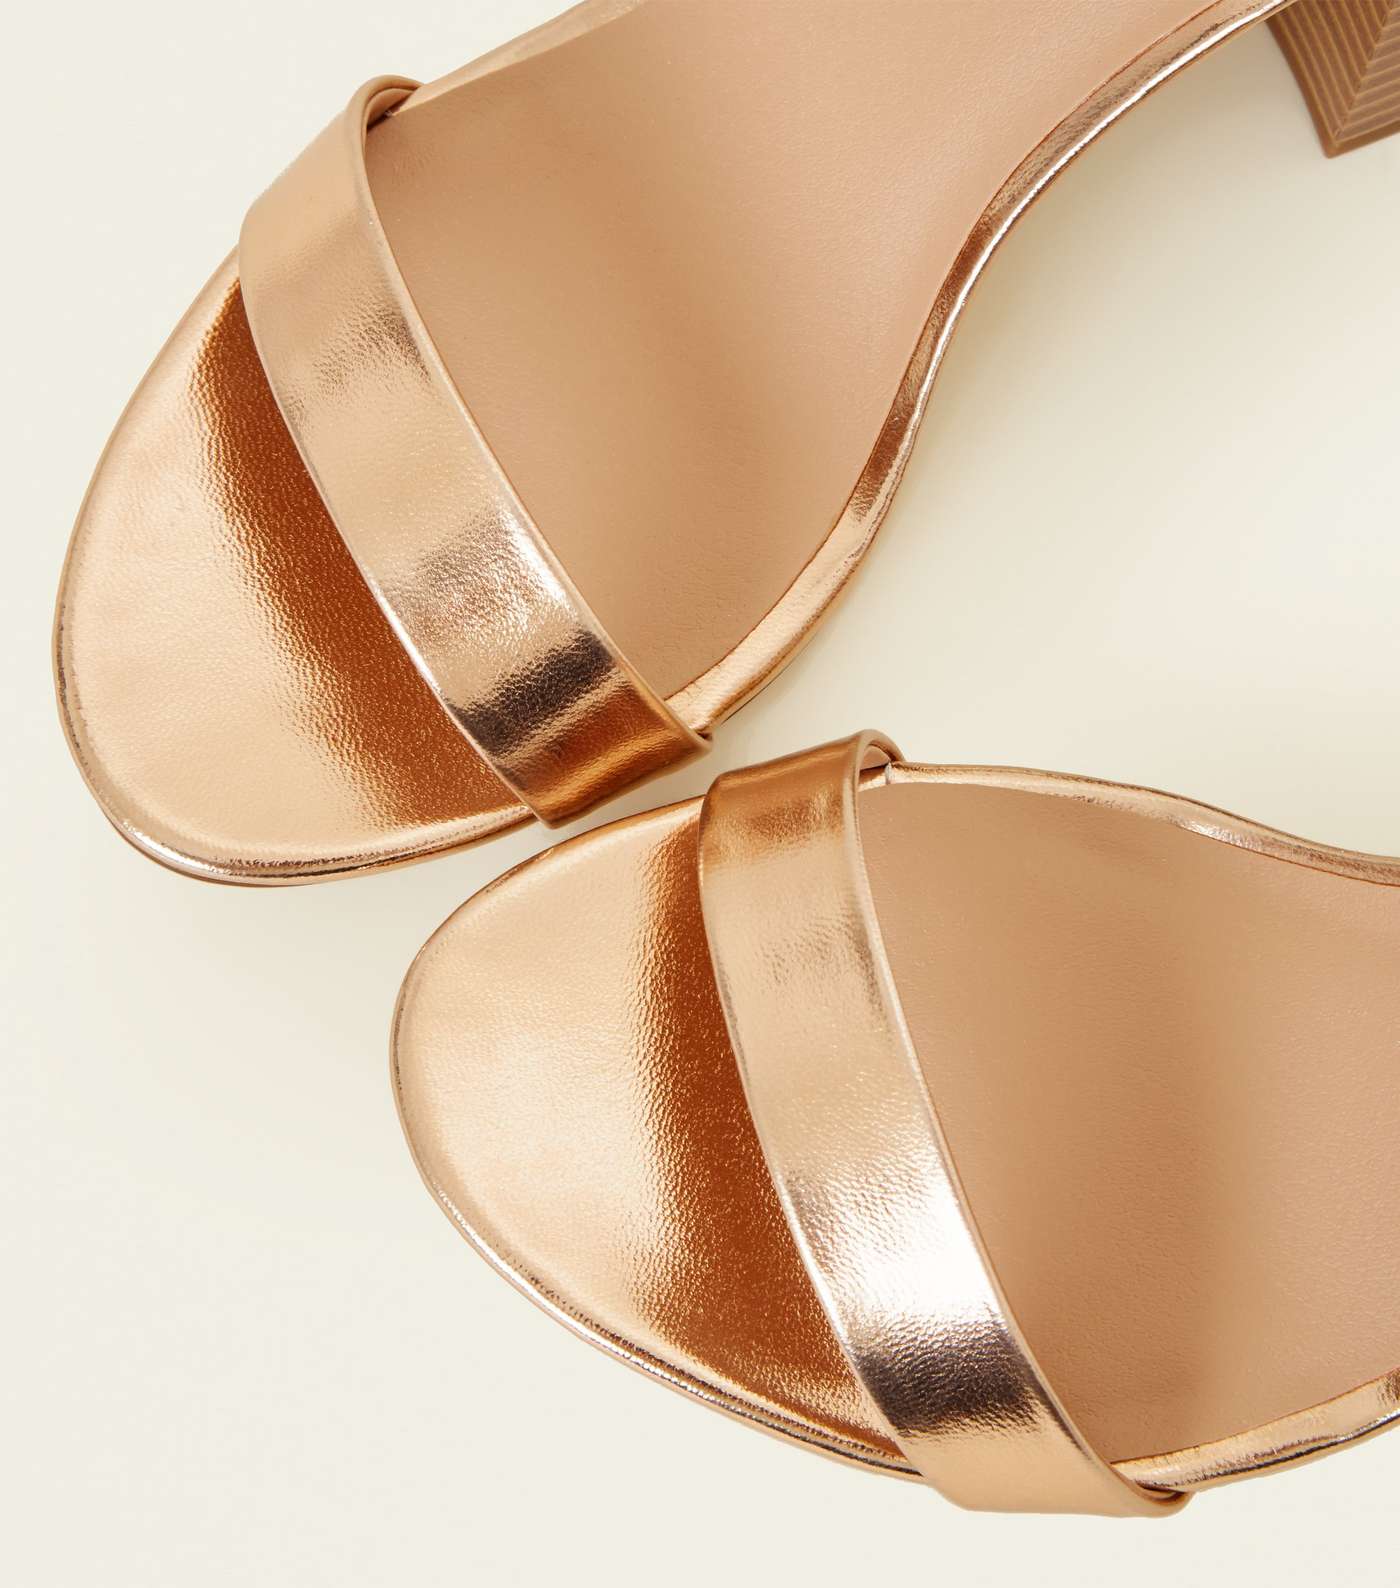 Rose Gold Leather-Look Wooden Block Heel Sandals Image 3